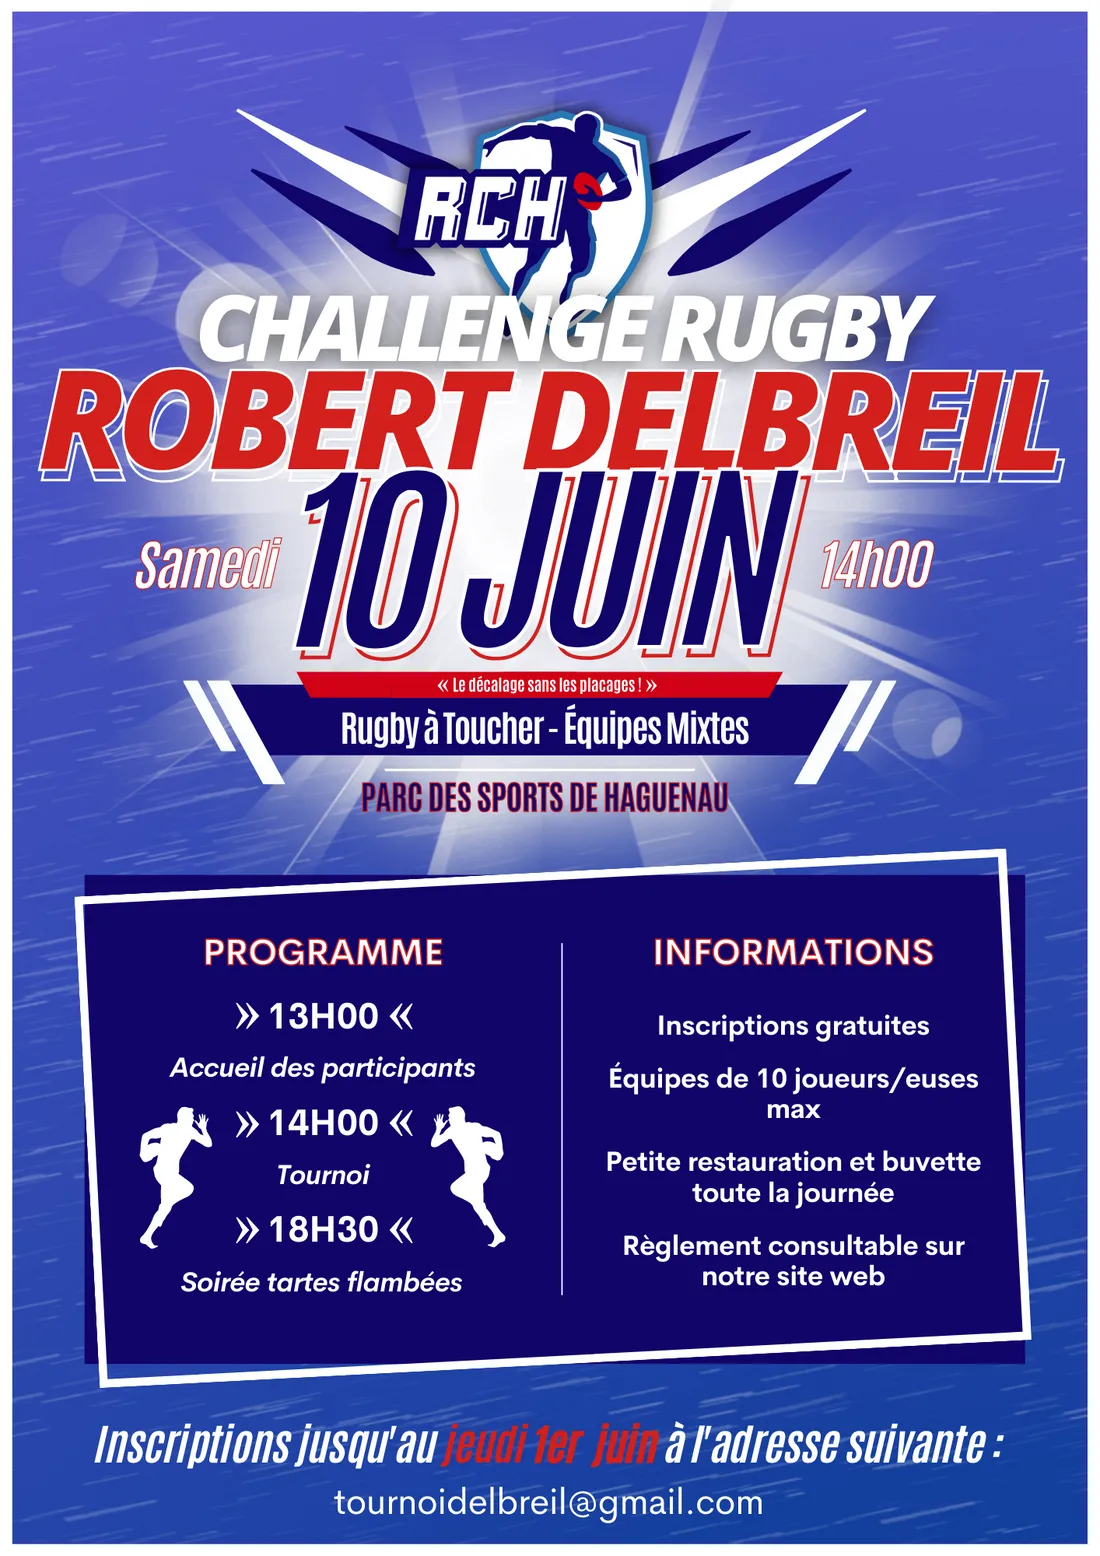 Challenge Rugby RCH